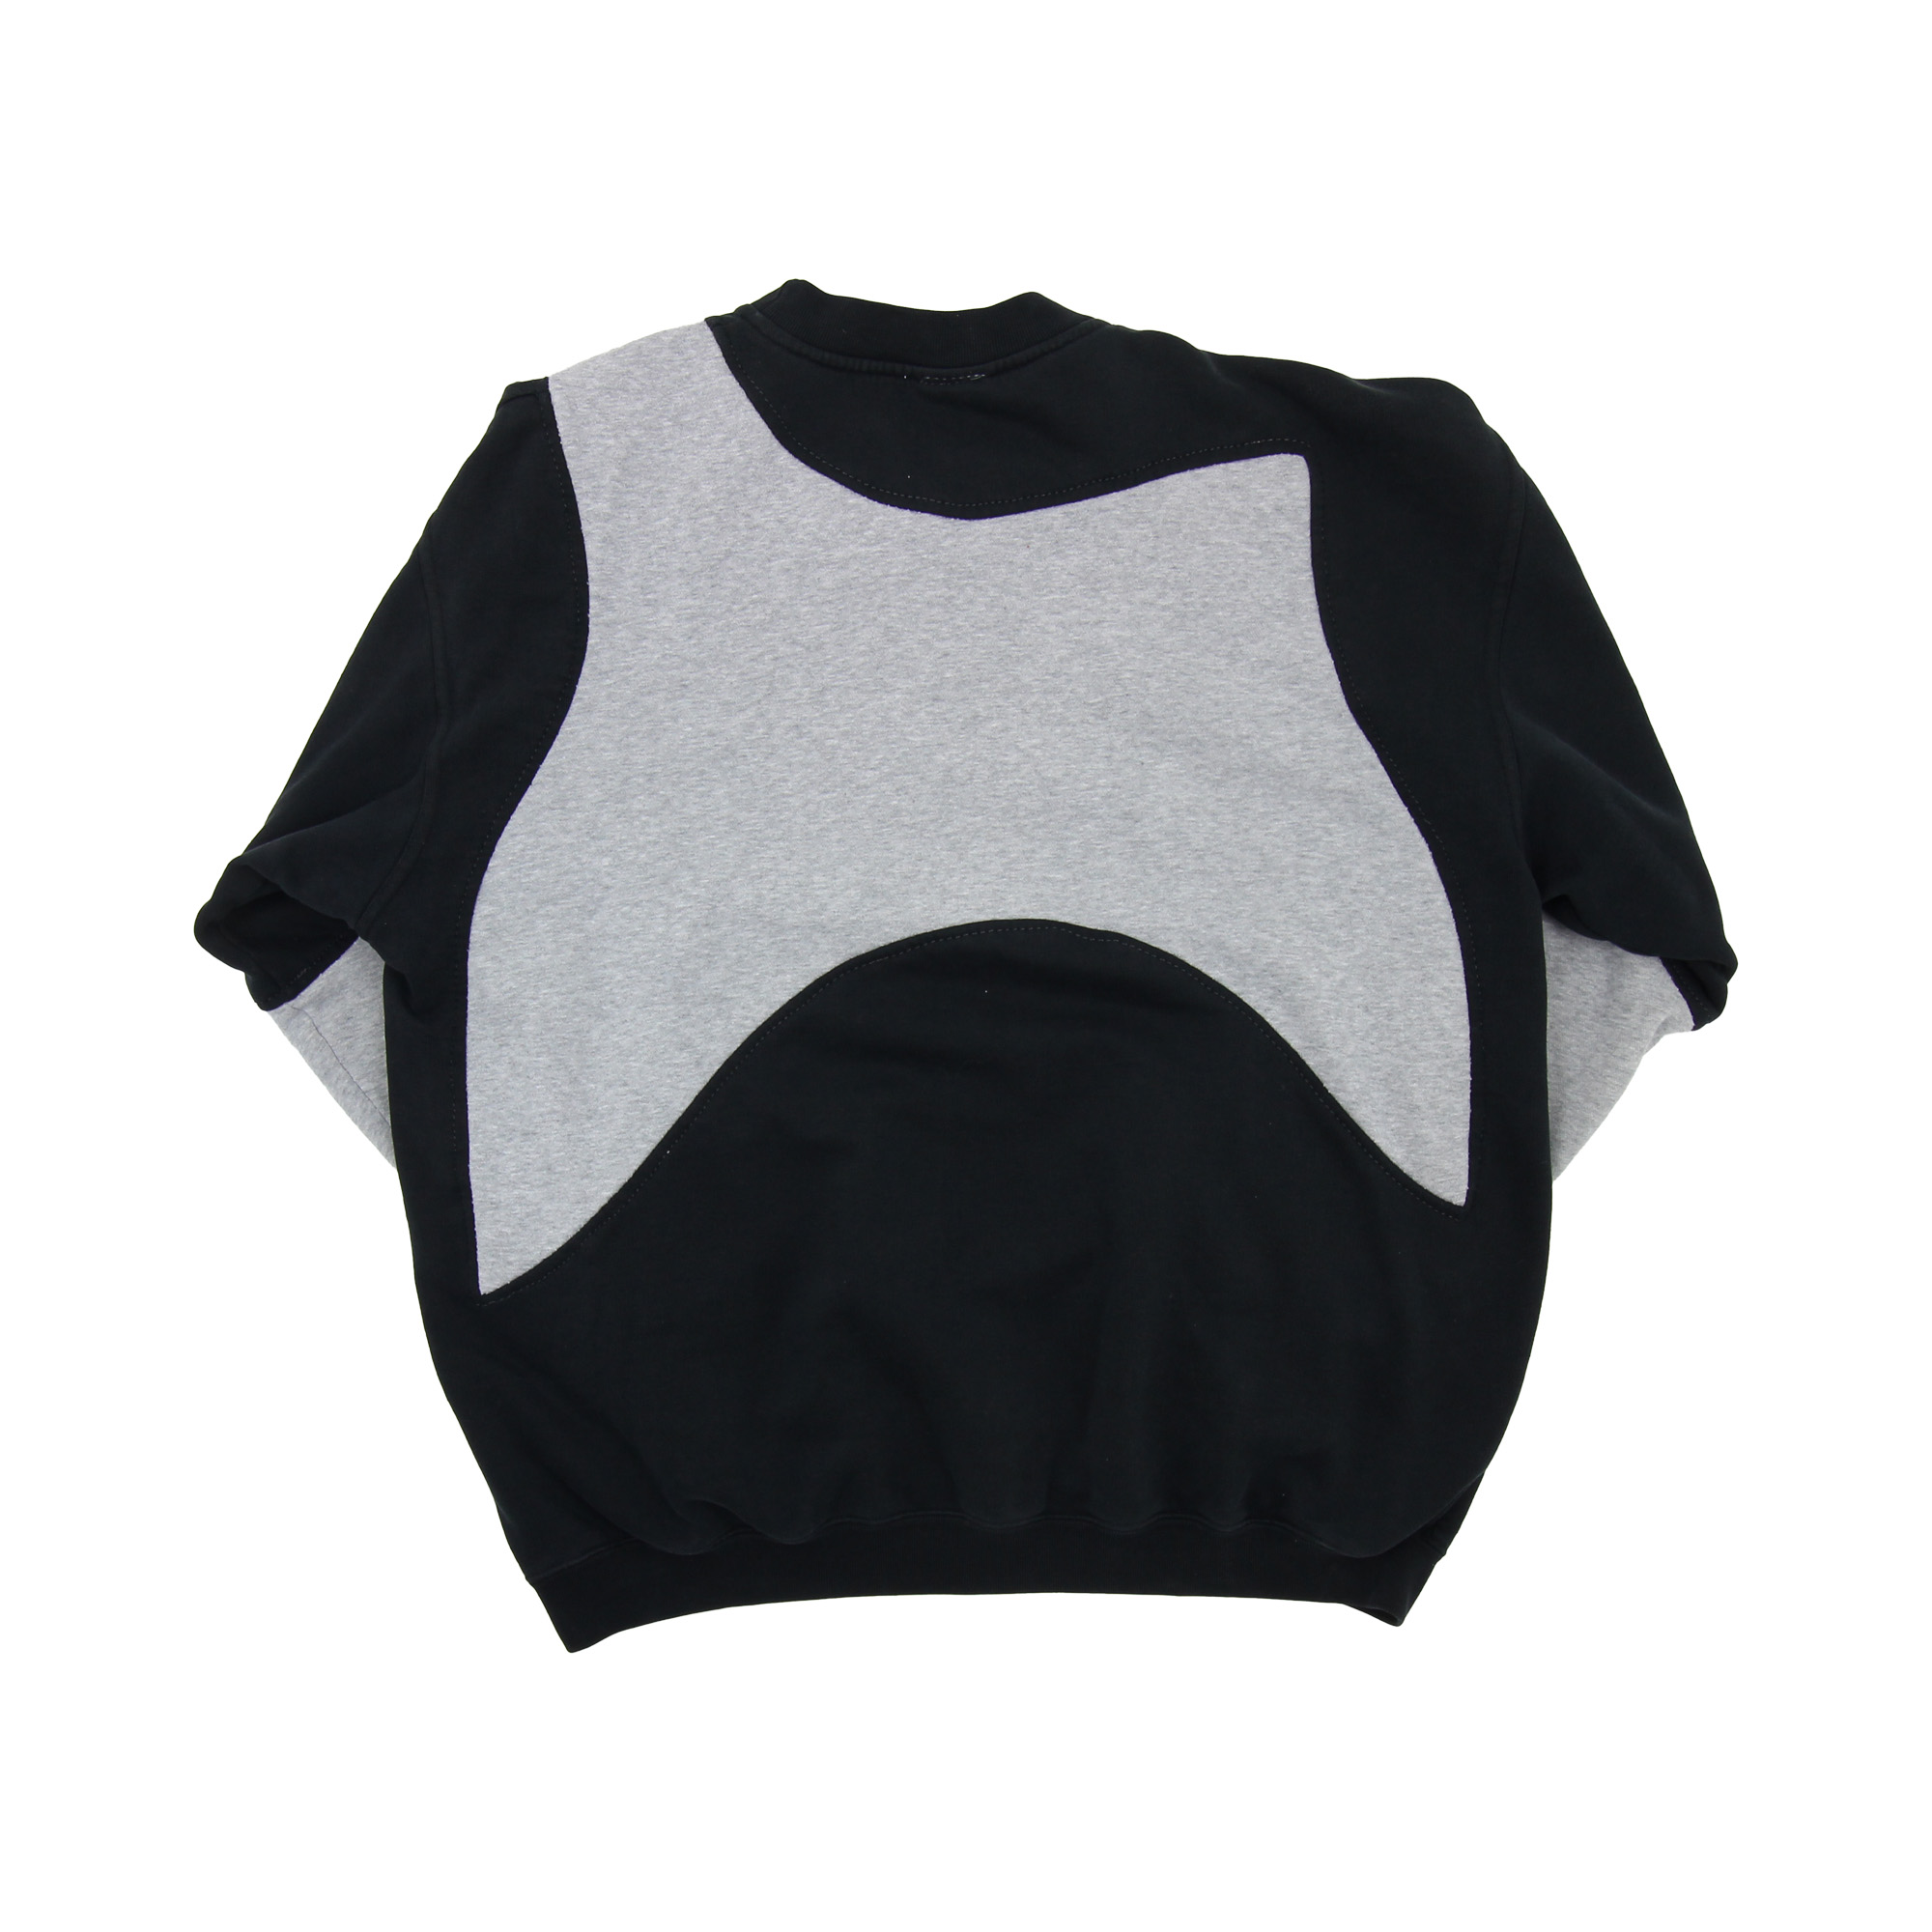 Nike Rework Sweatshirt -  XL